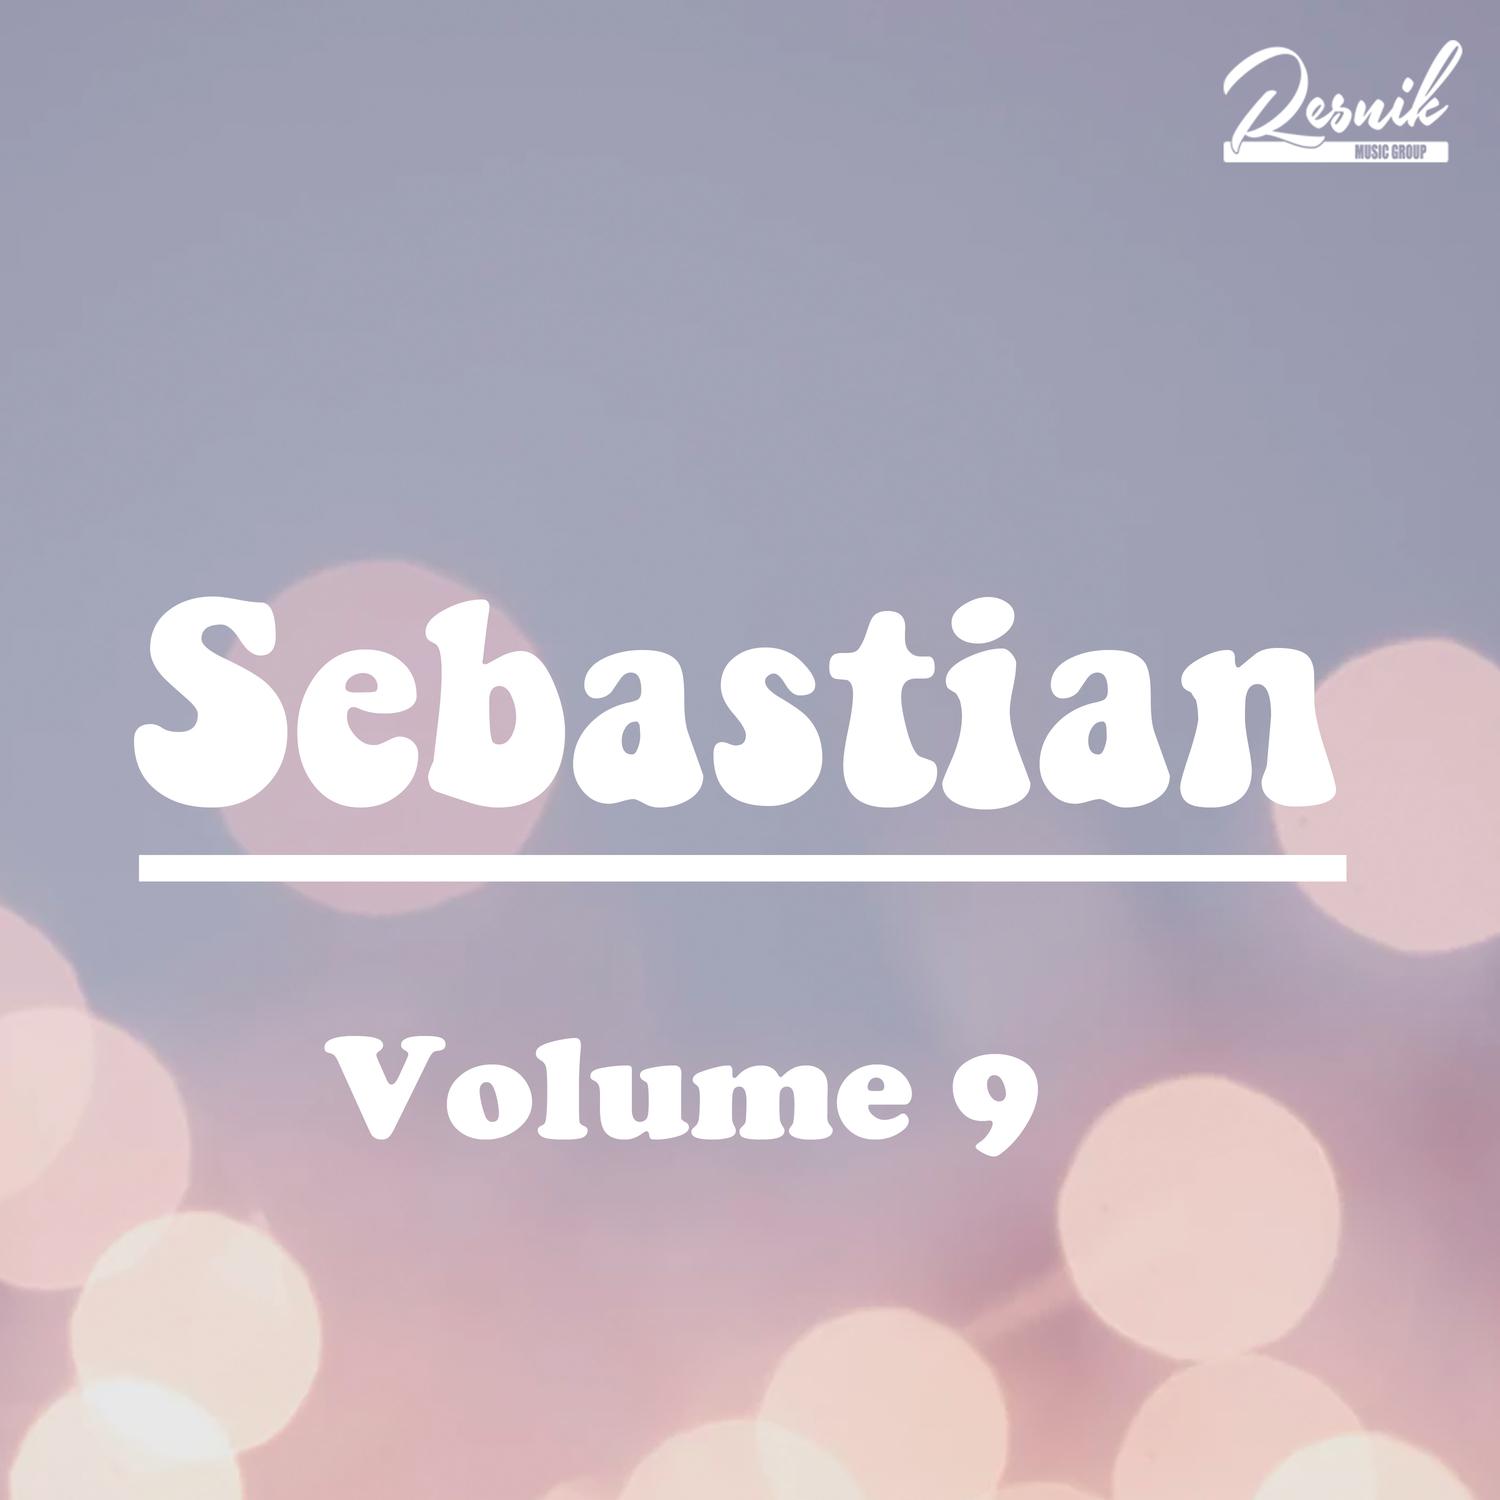 Sebastion Vol. 9